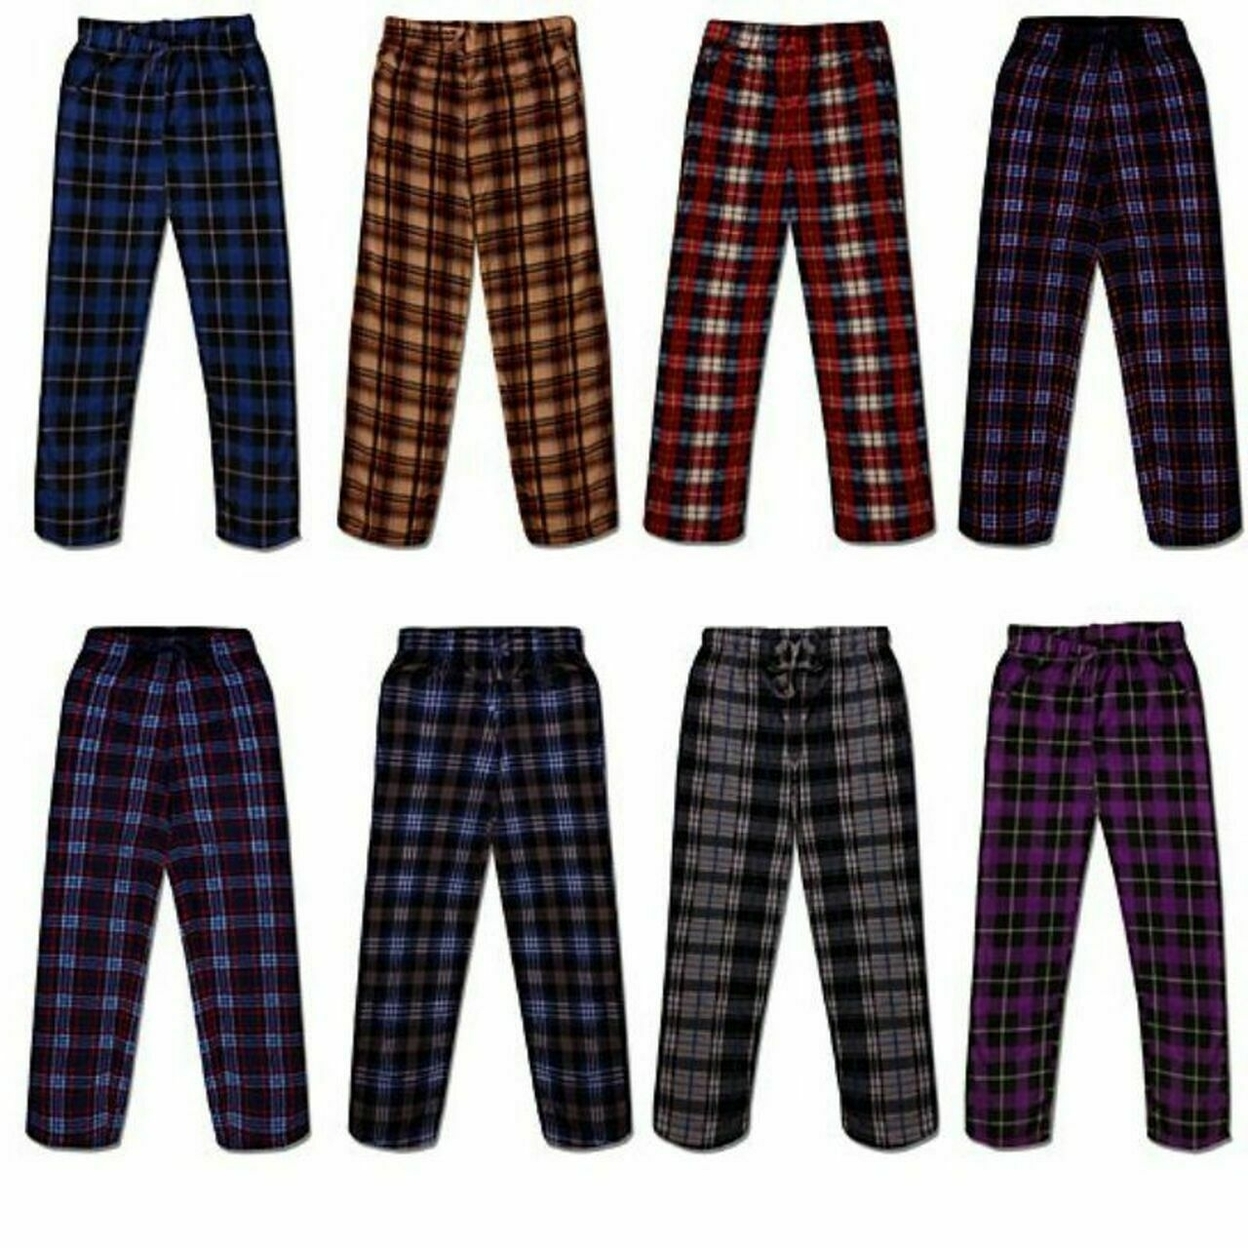 2-Pack: Men's Ultra Soft Cozy Flannel Fleece Plaid Pajama Sleep Bottom Lounge Pants - Black & Red, Small